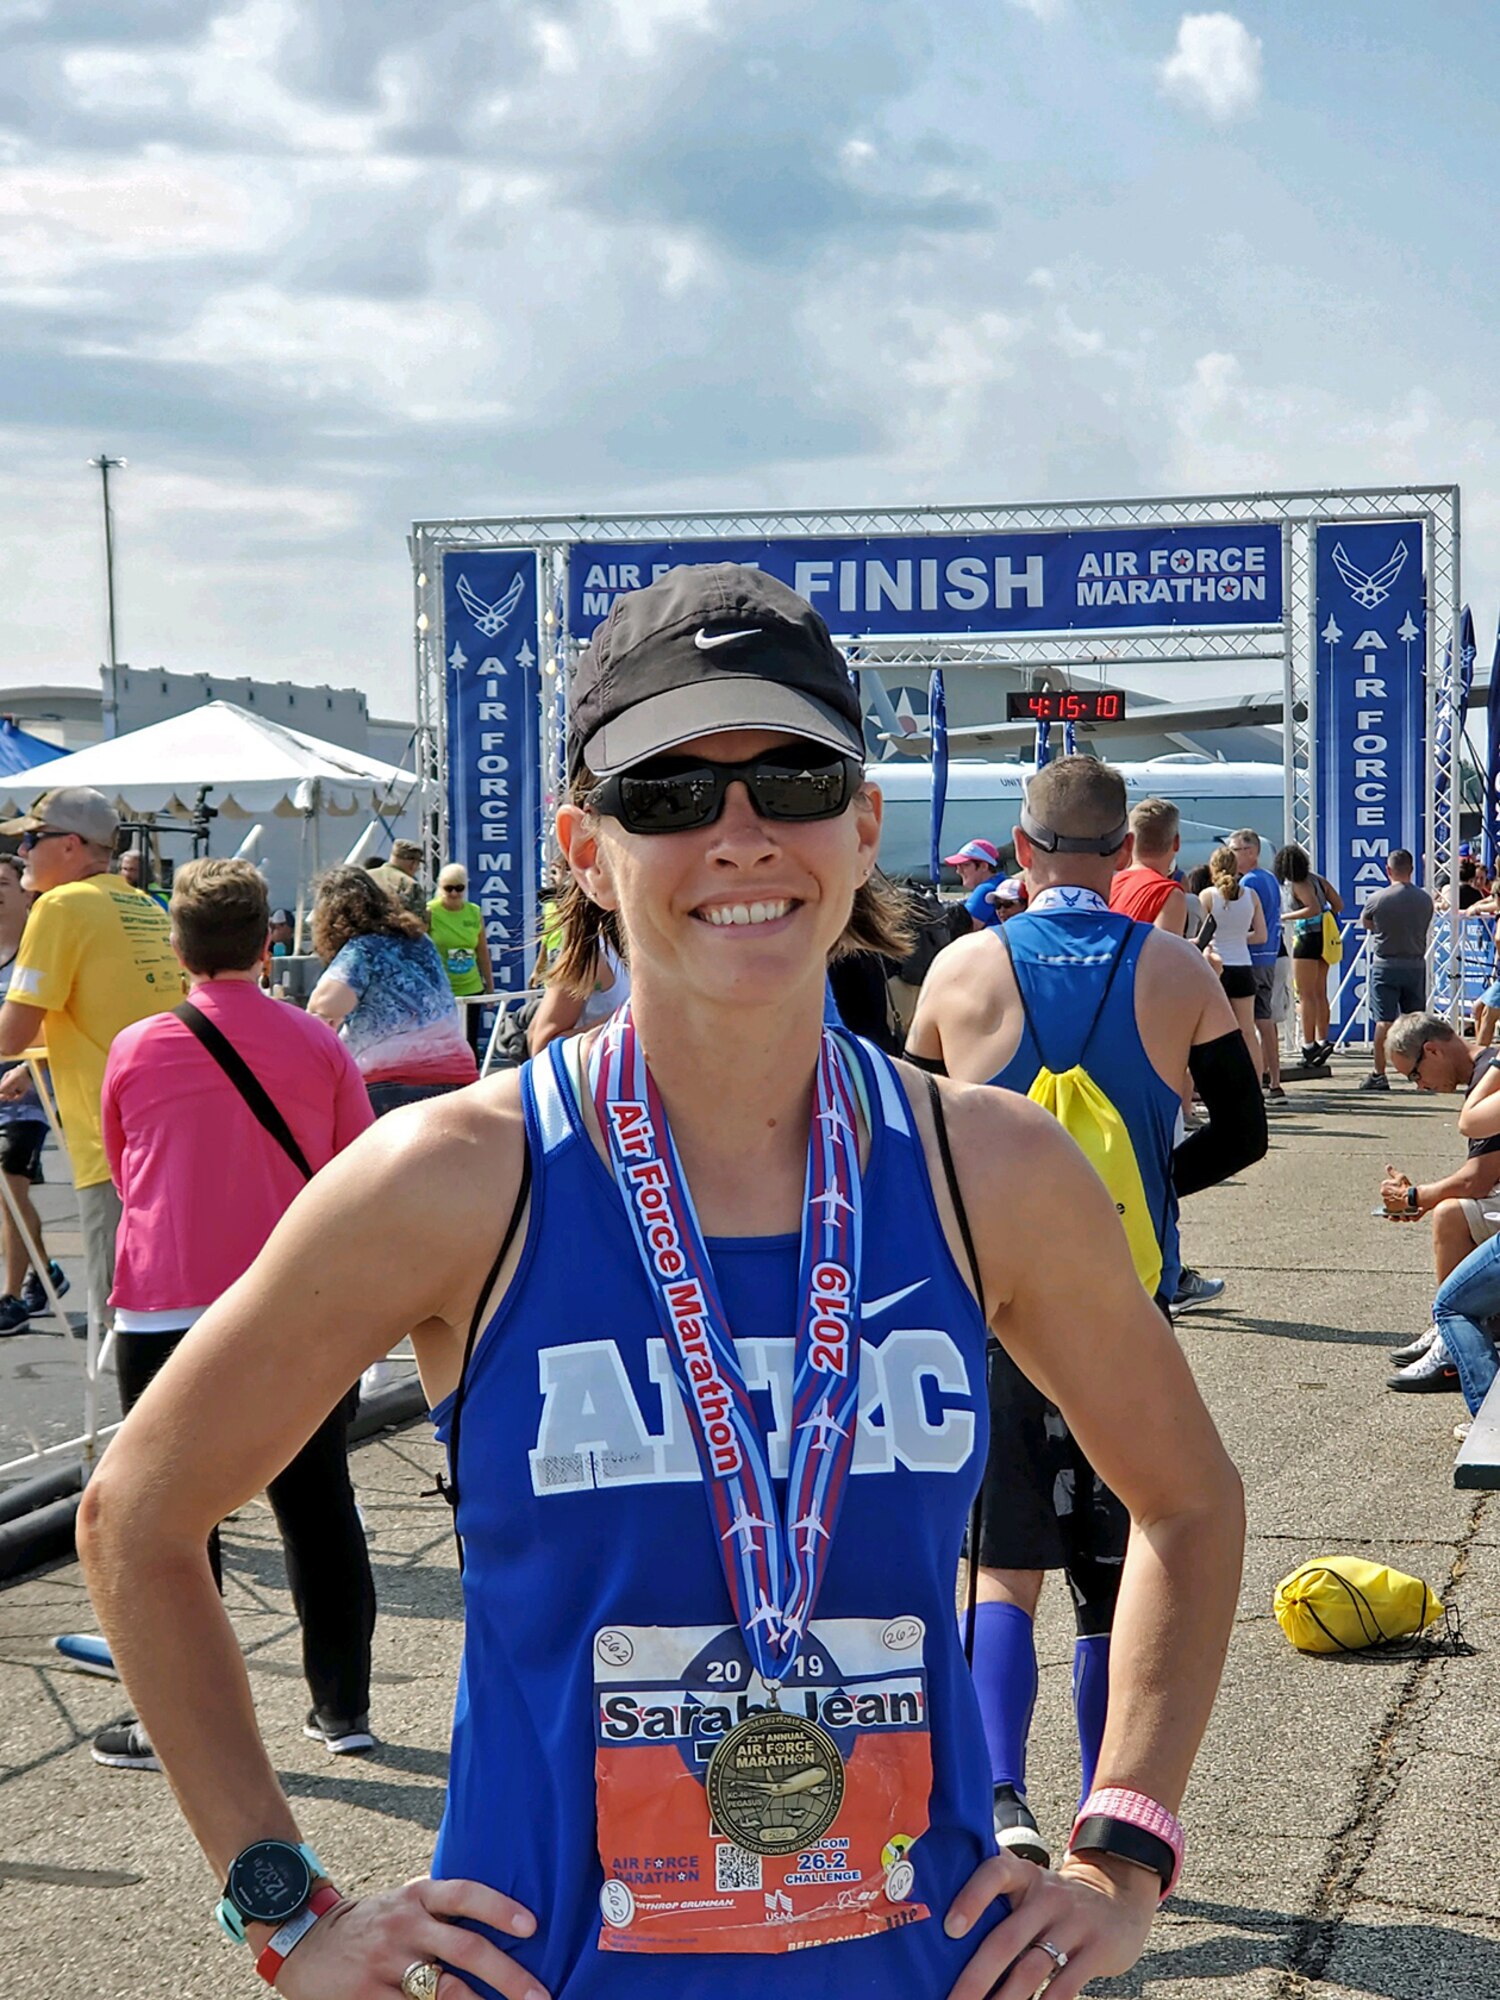 Reservist takes on Air Force Marathon